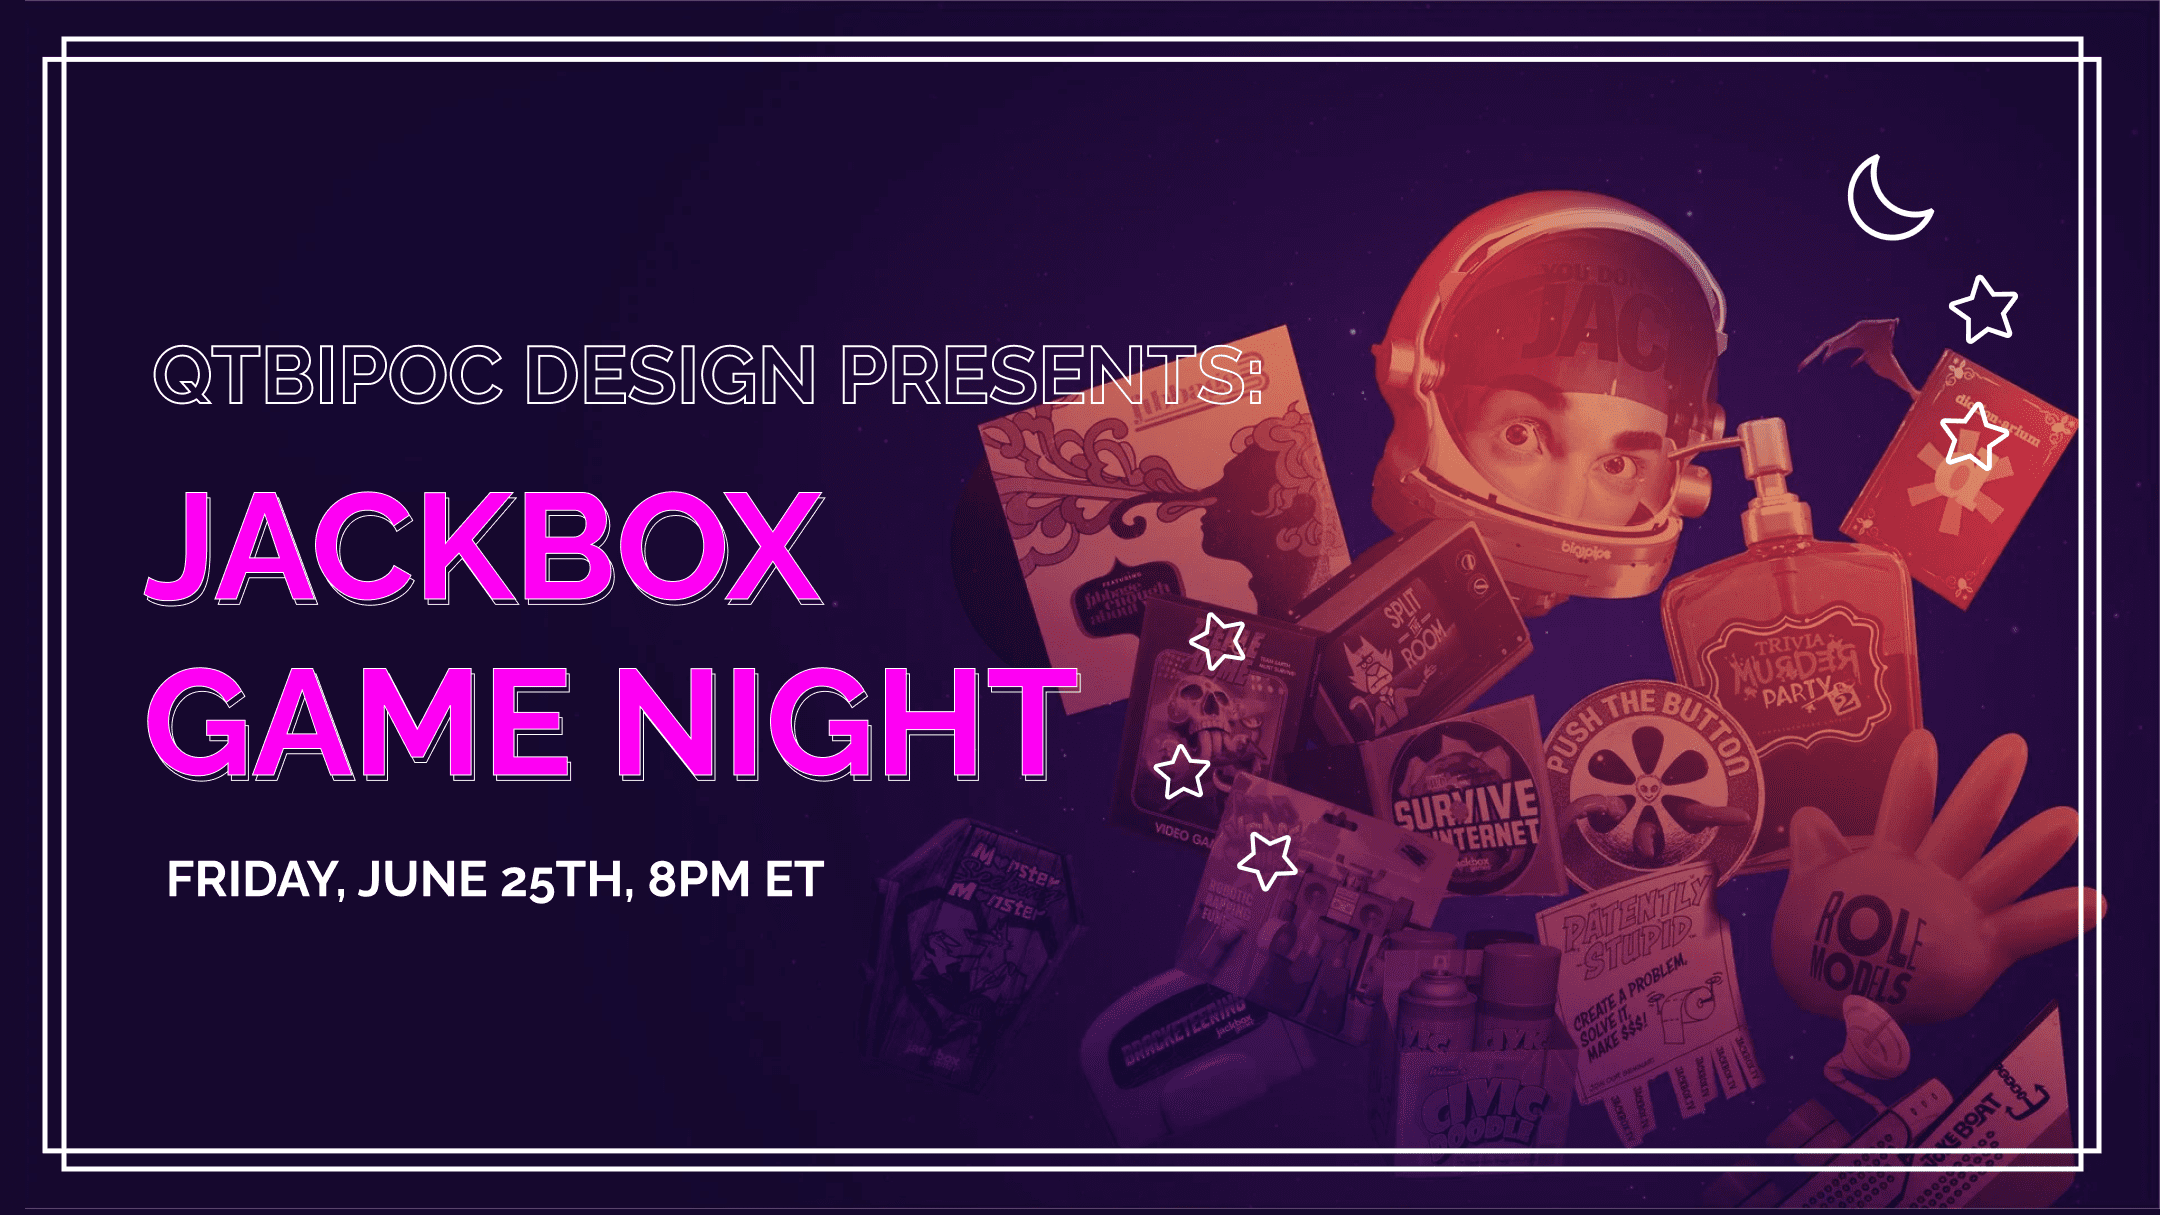 QTBIPOC Design Presents: Jackbox Game Night